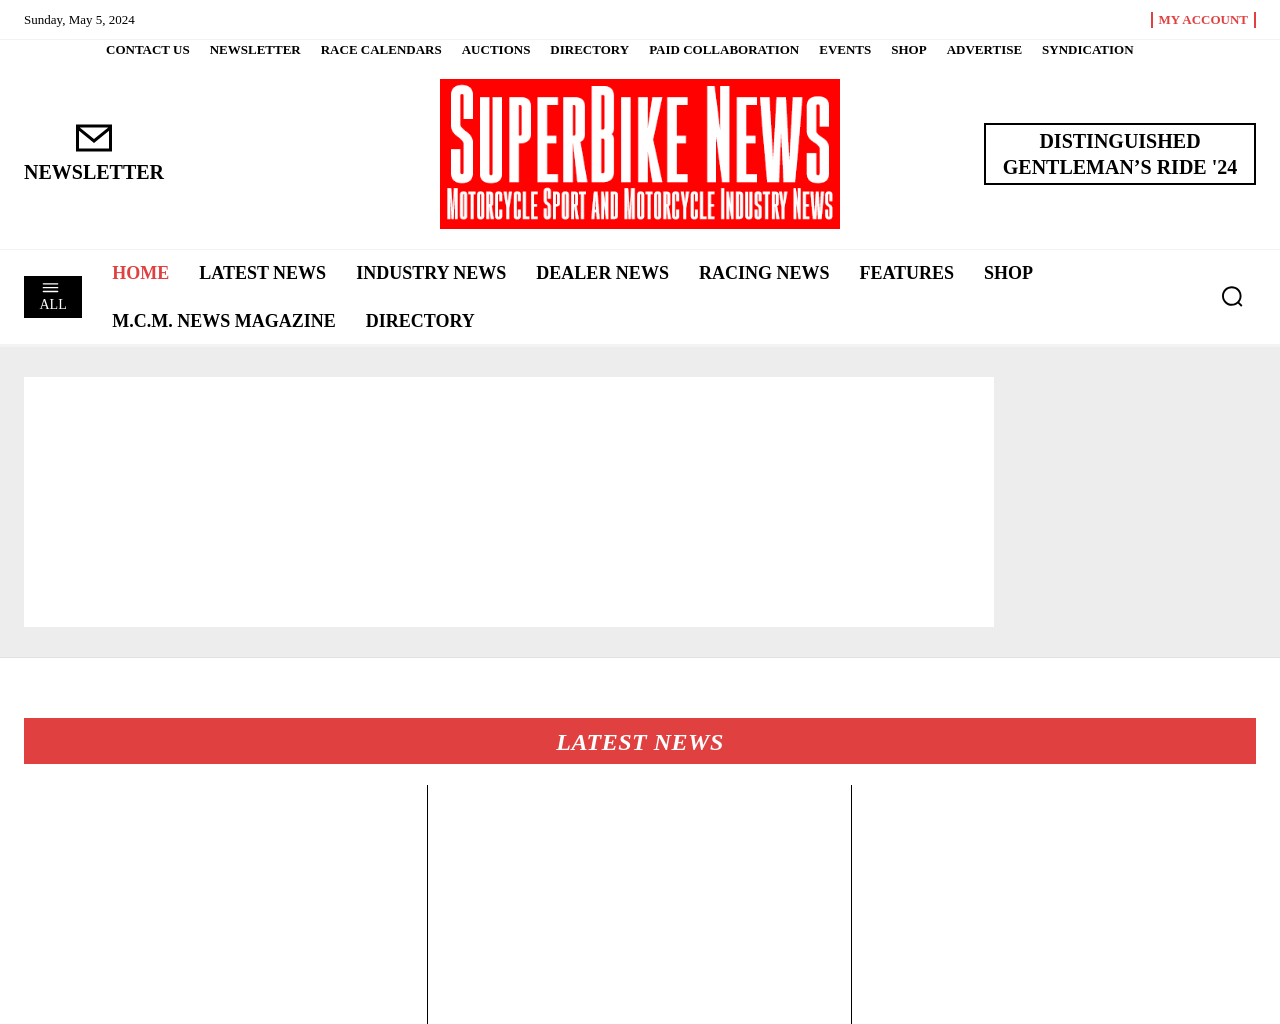 superbike-news.co.uk